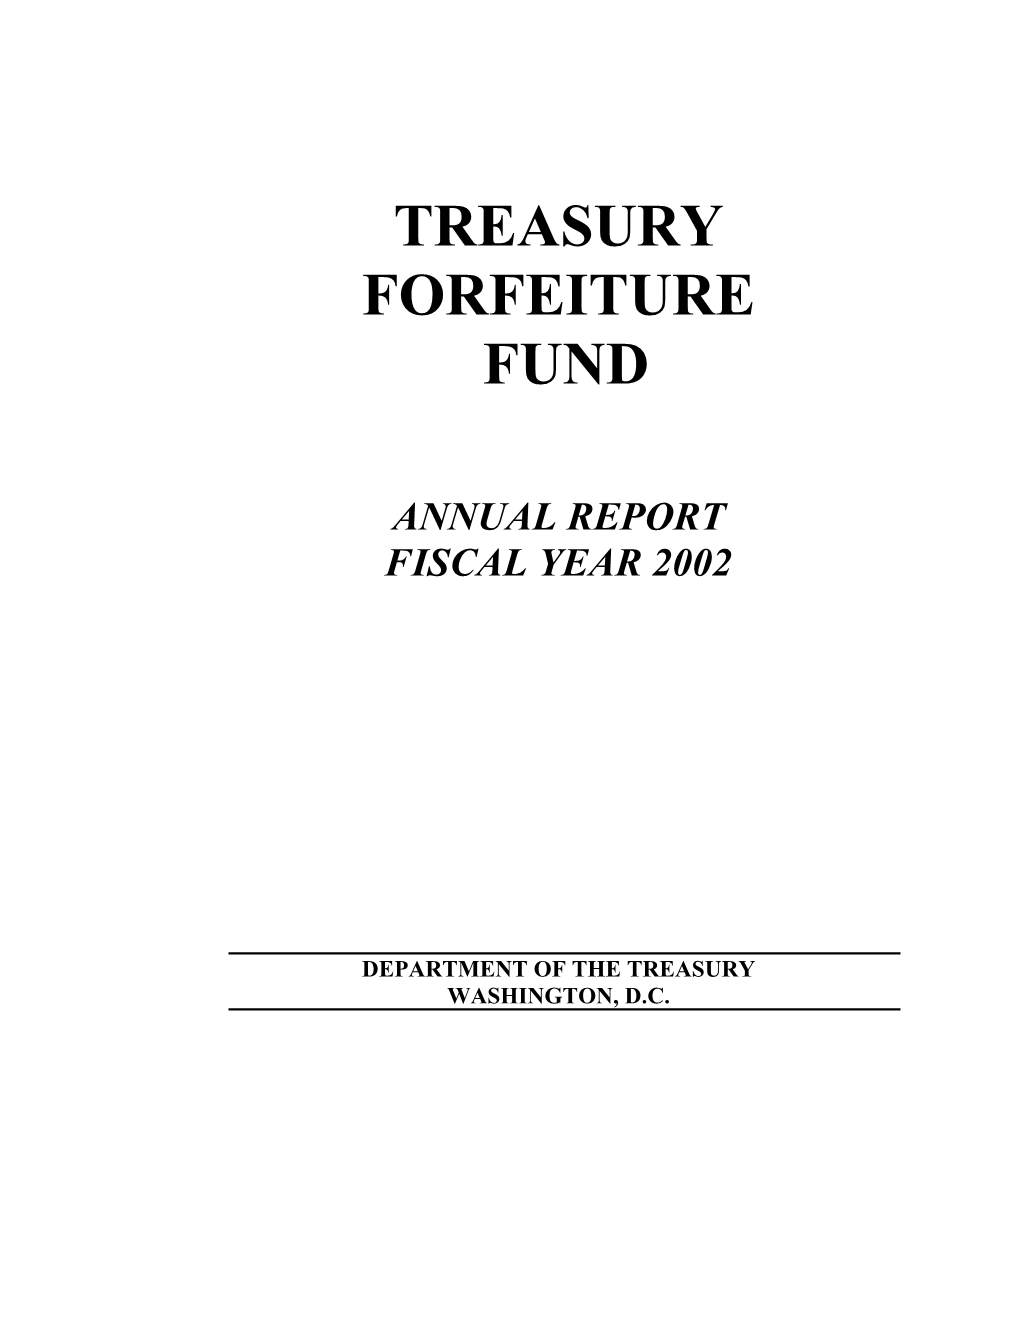 Treasury Forfeiture Fund